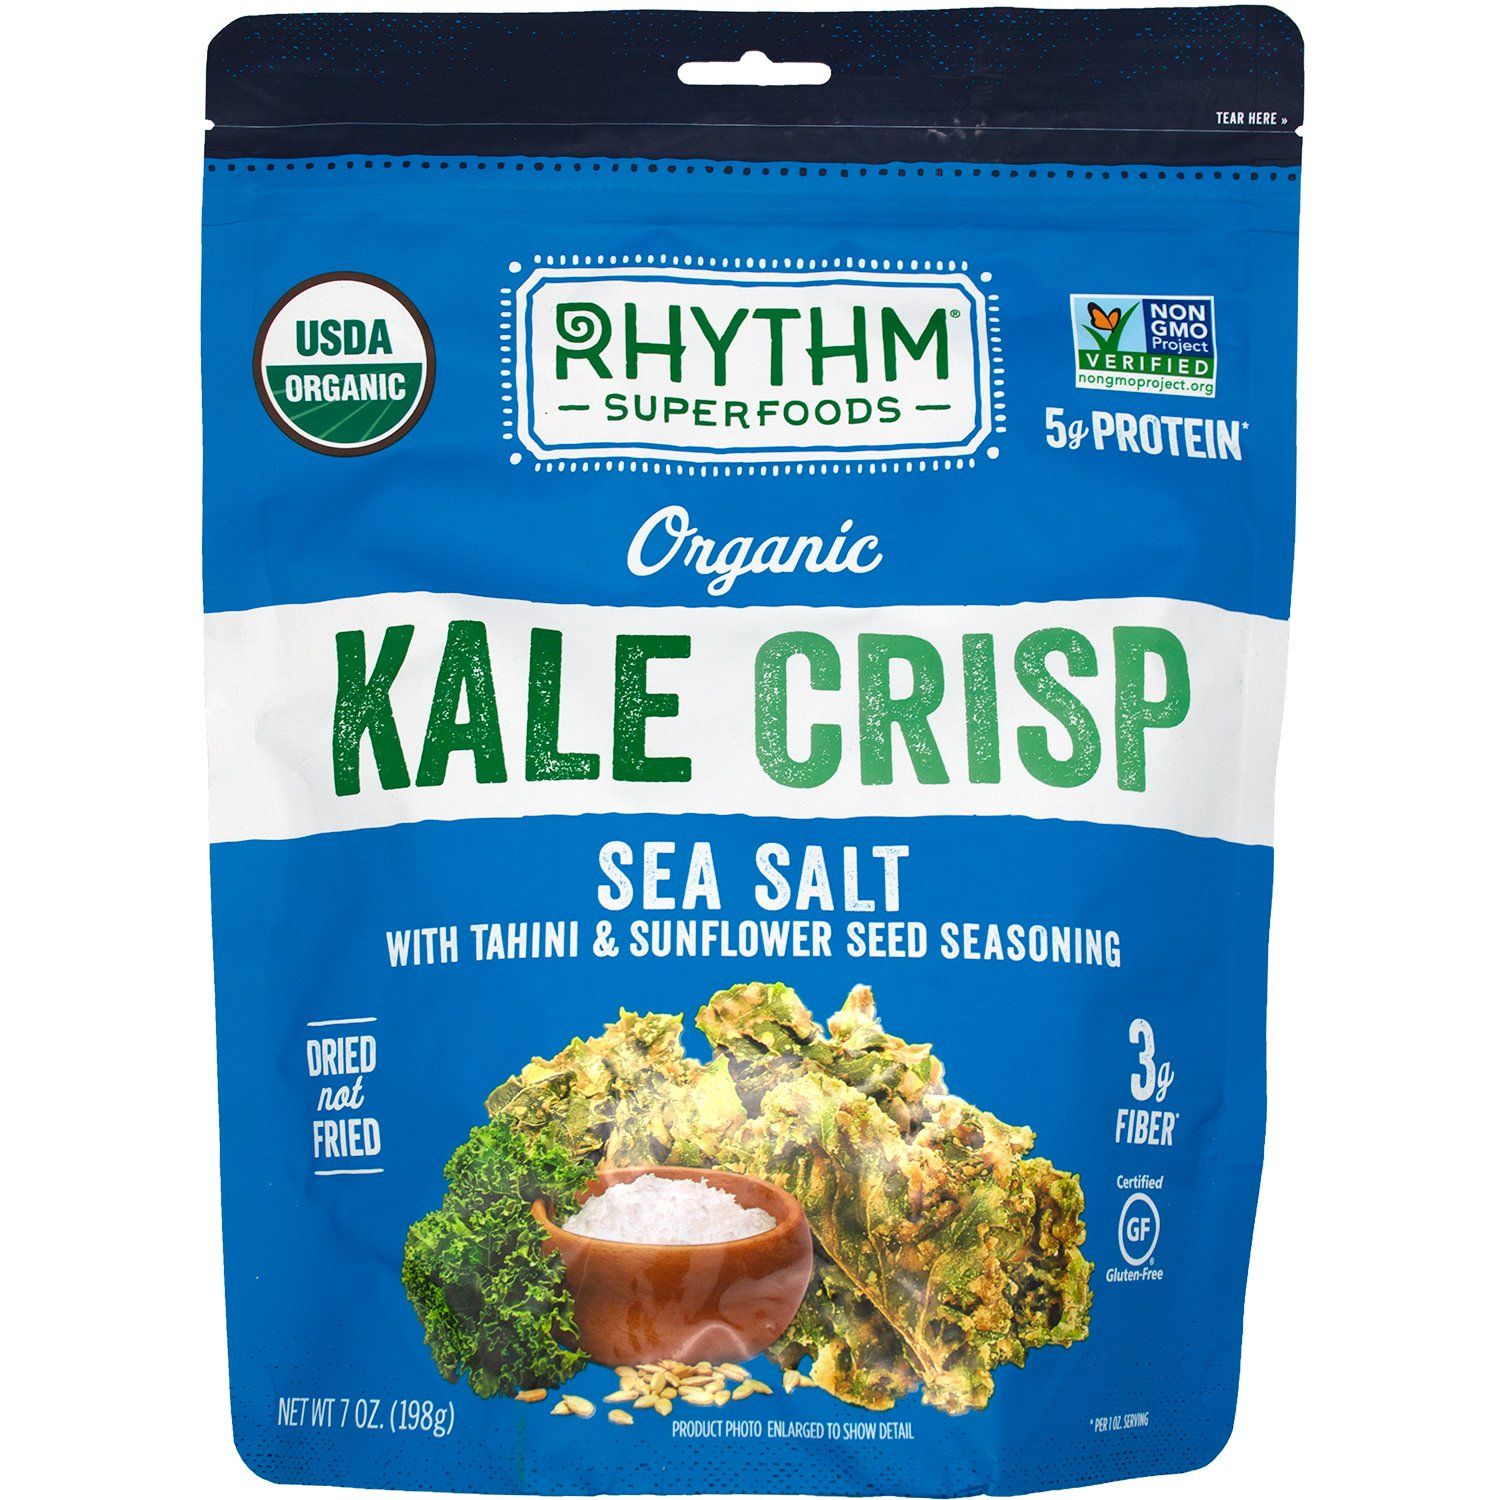 Rhythm Organic Kale Chips